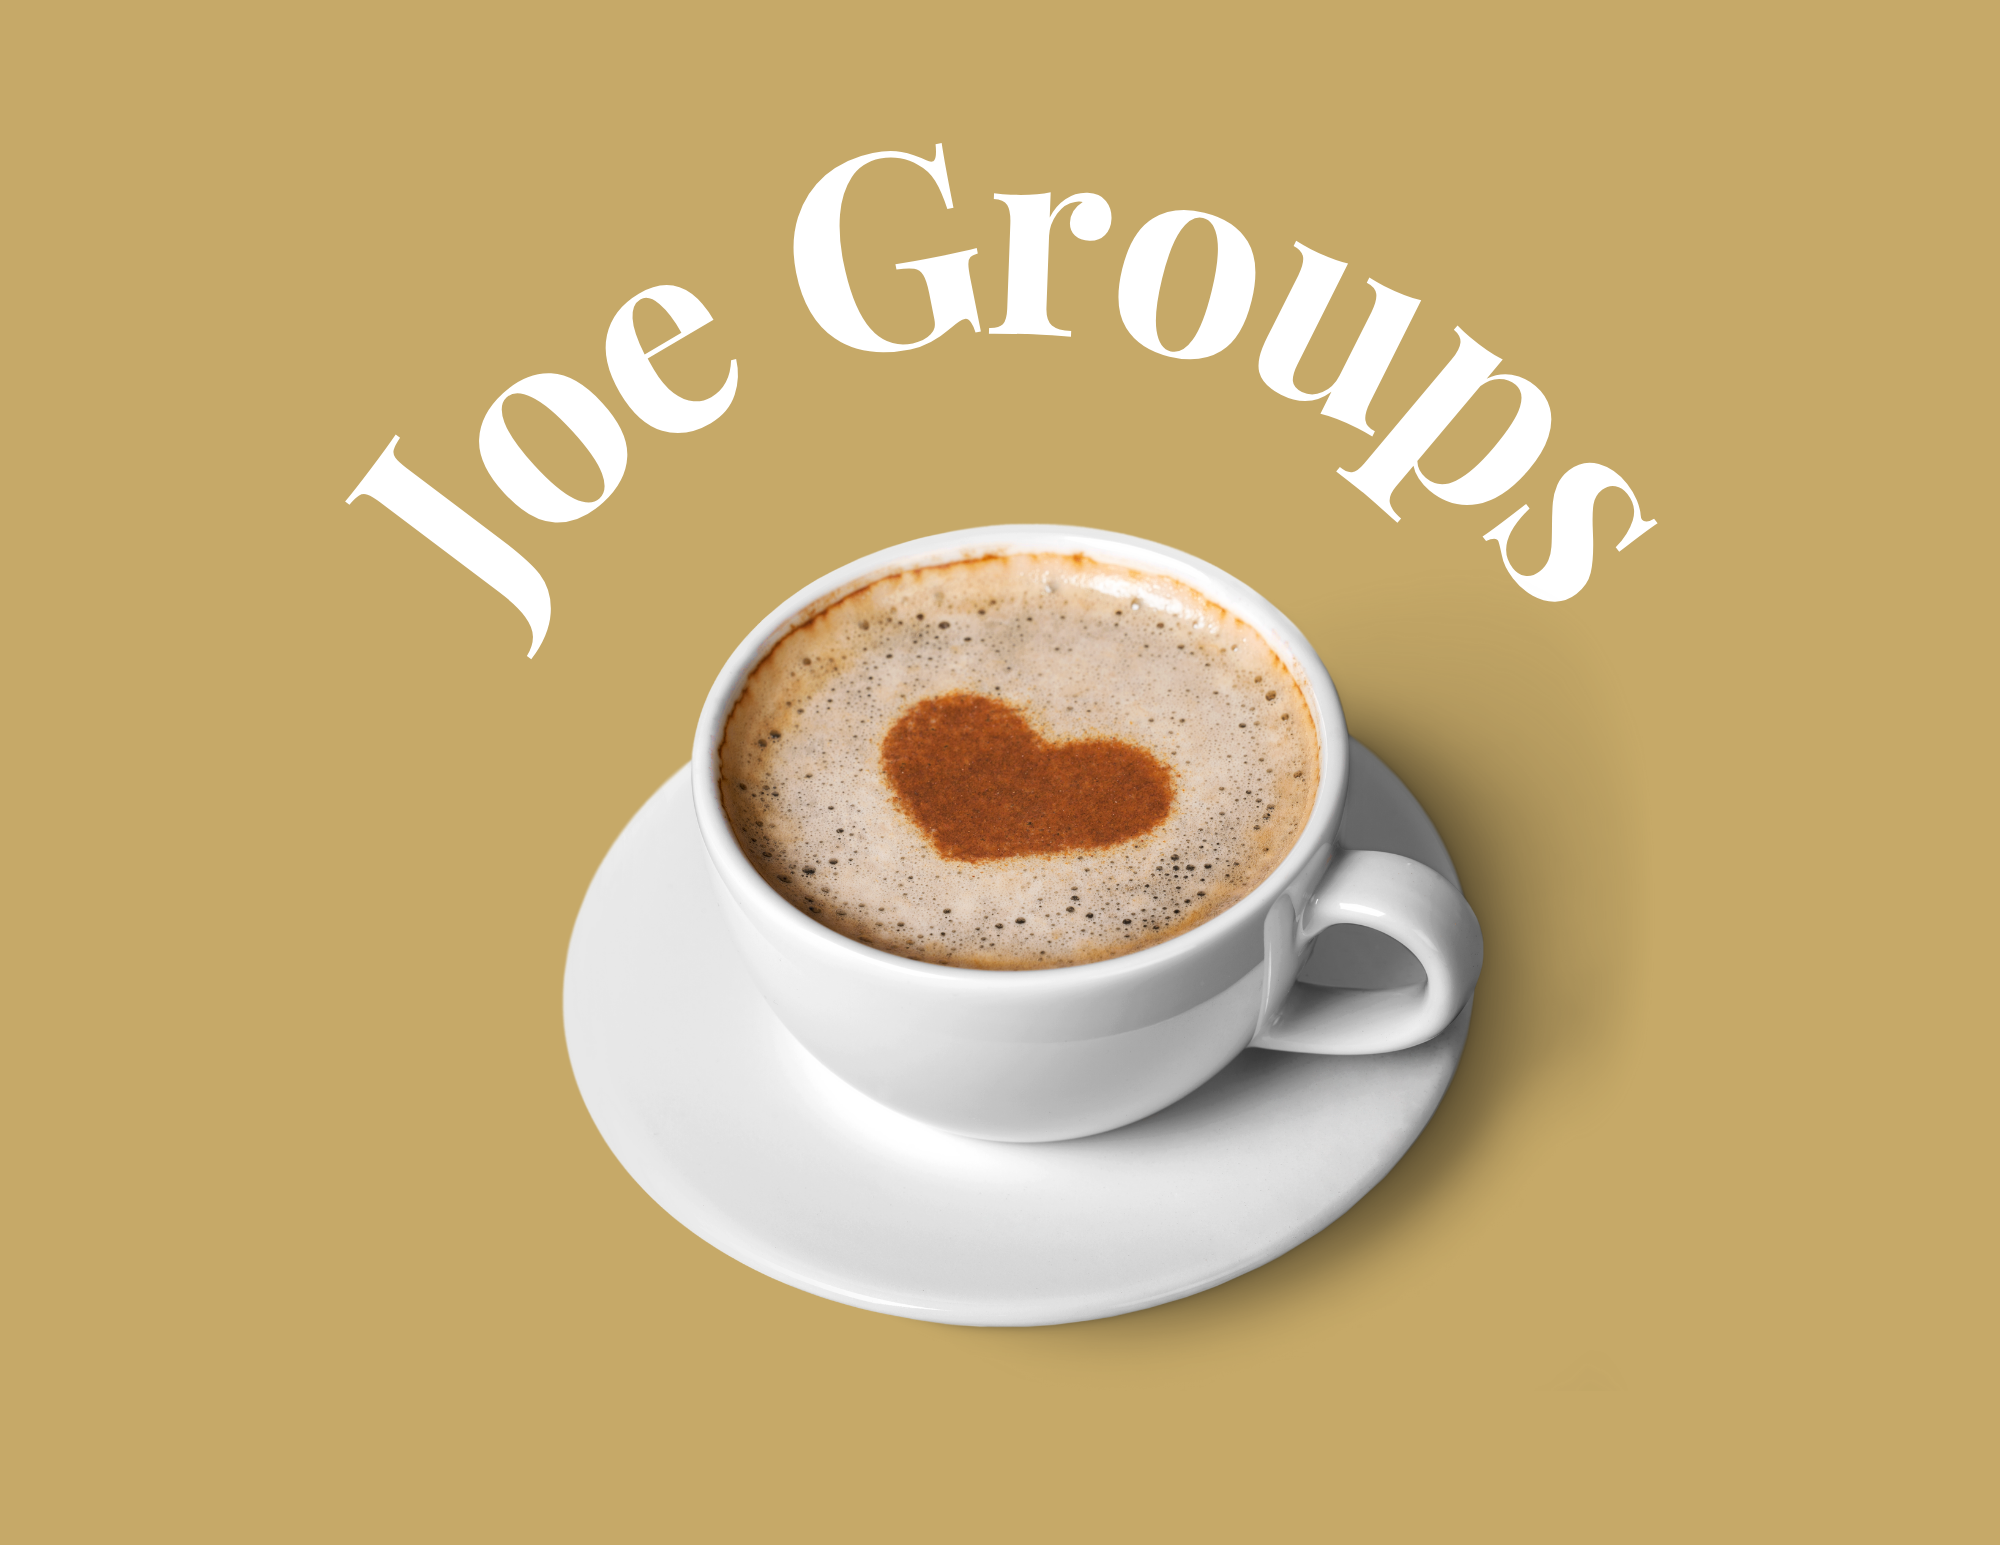 Joe Groups